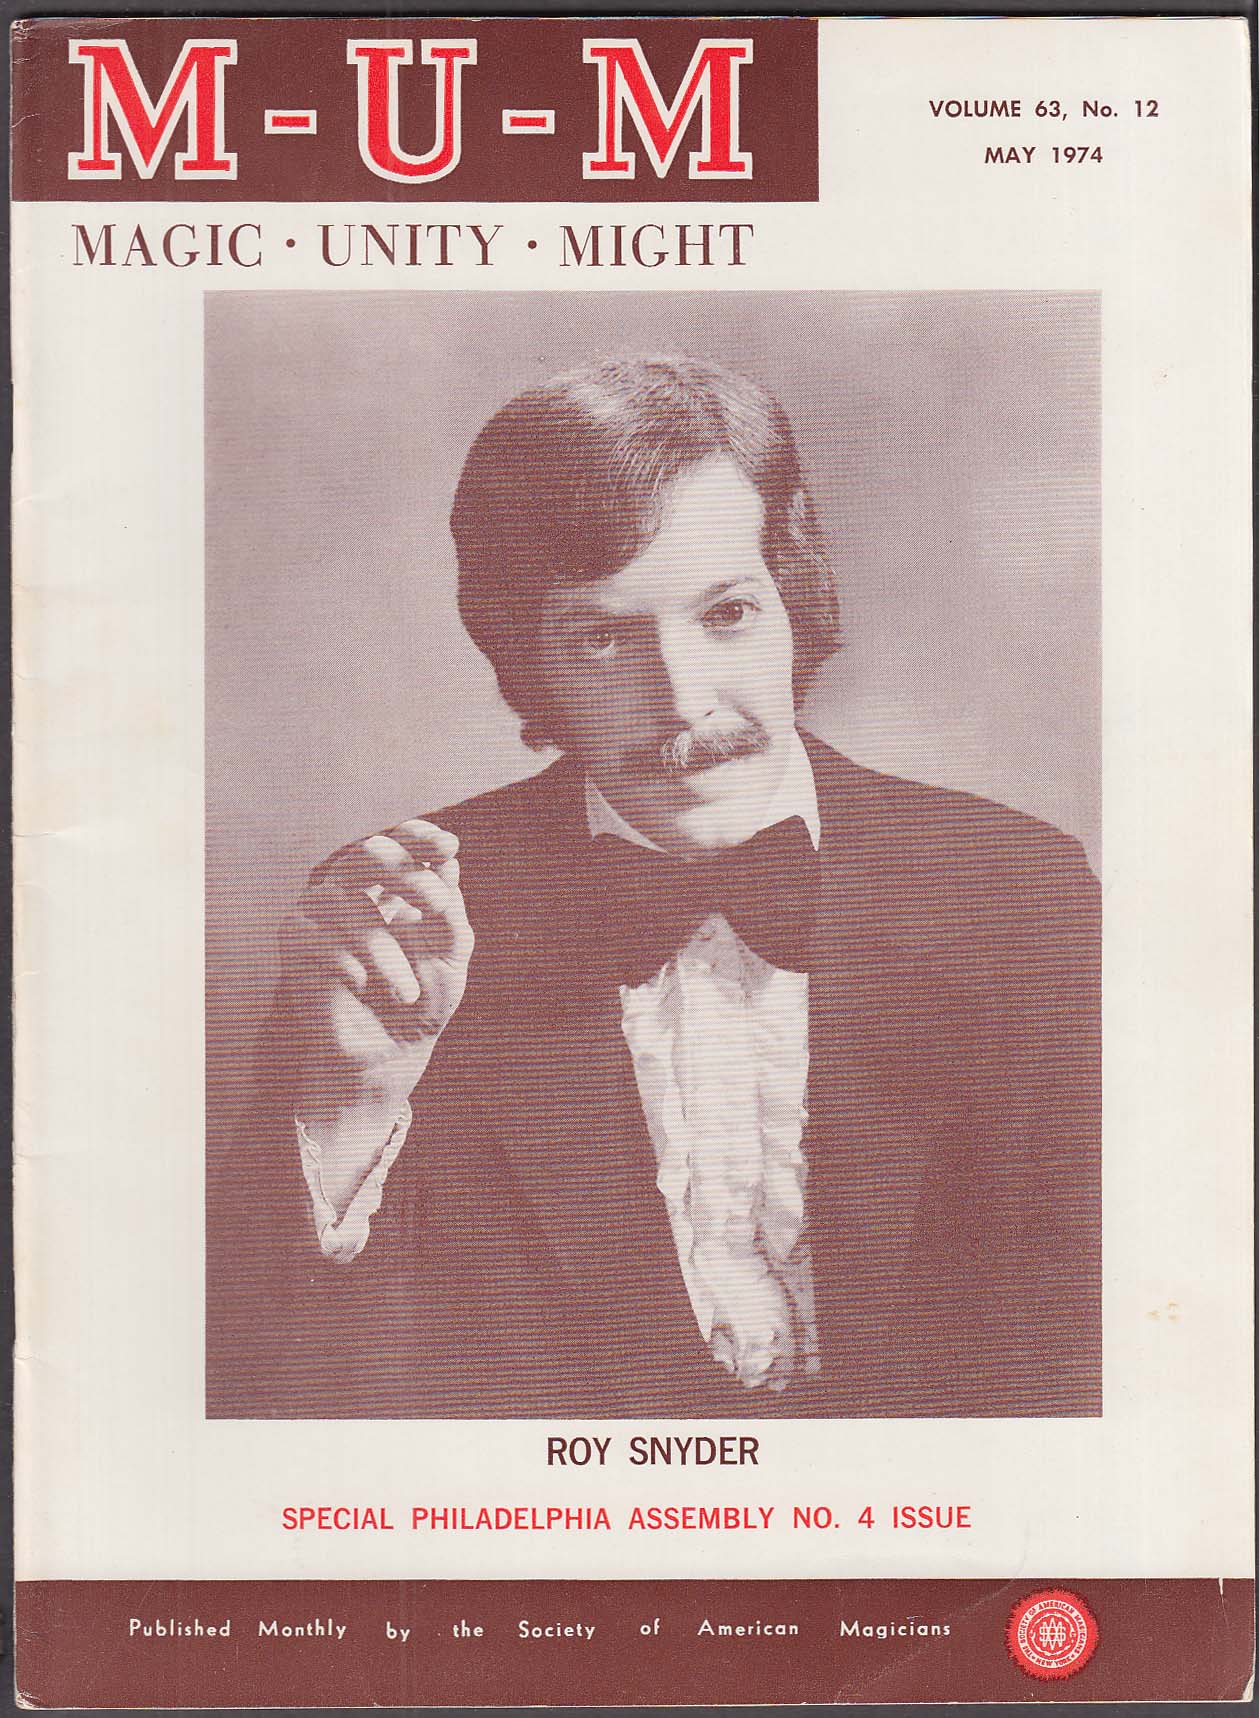 MUM MAGIC UNITY MIGHT Roy Snyder Philadelphia Assembly 4 5 1974